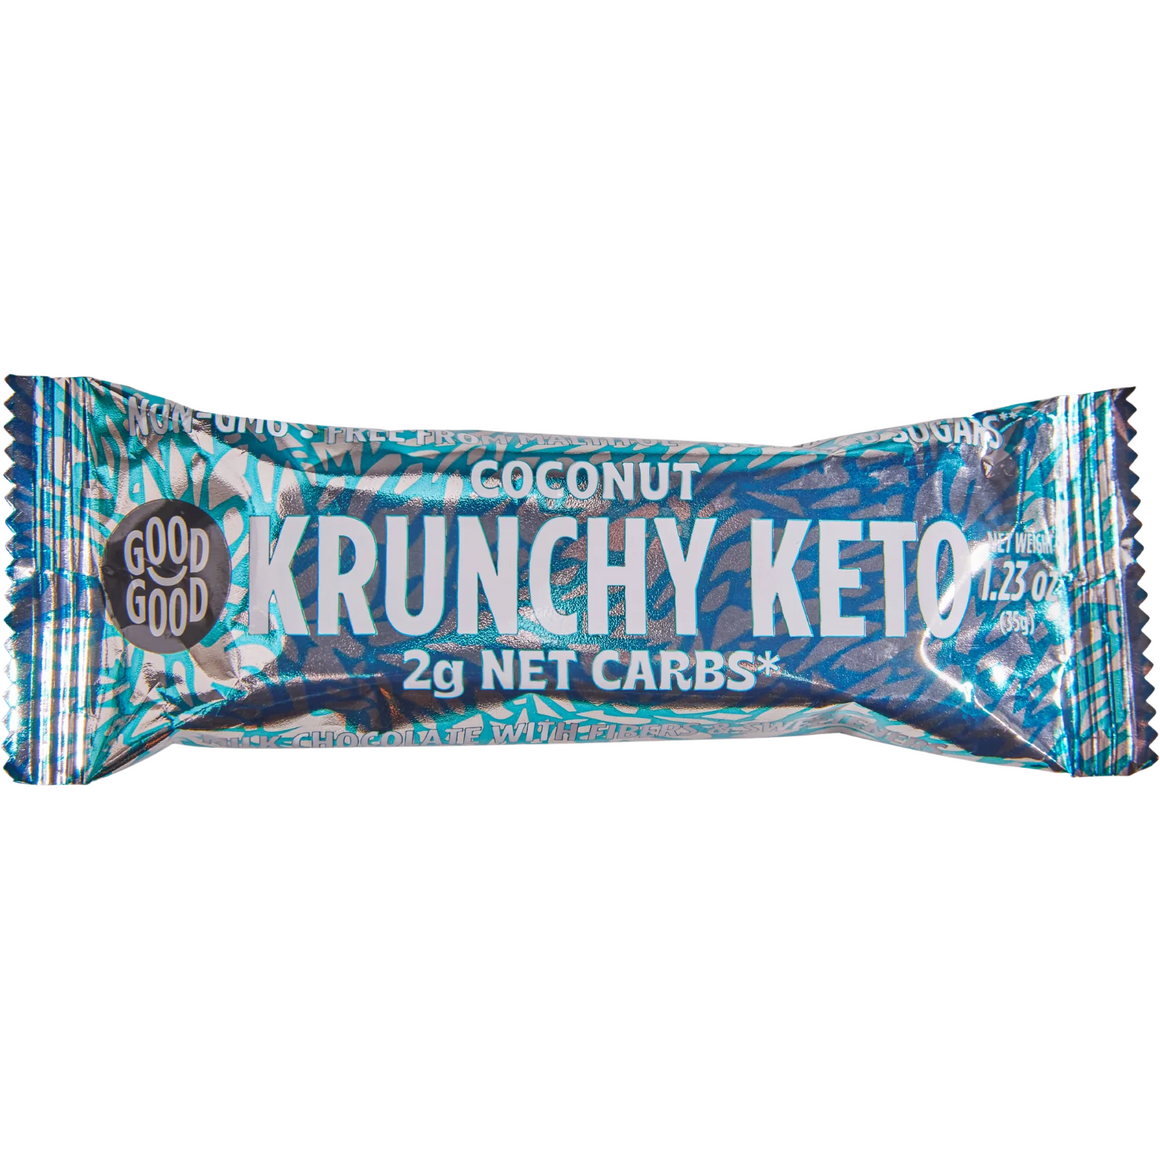 Good Good - Krunchy Keto - Coconut - 35g